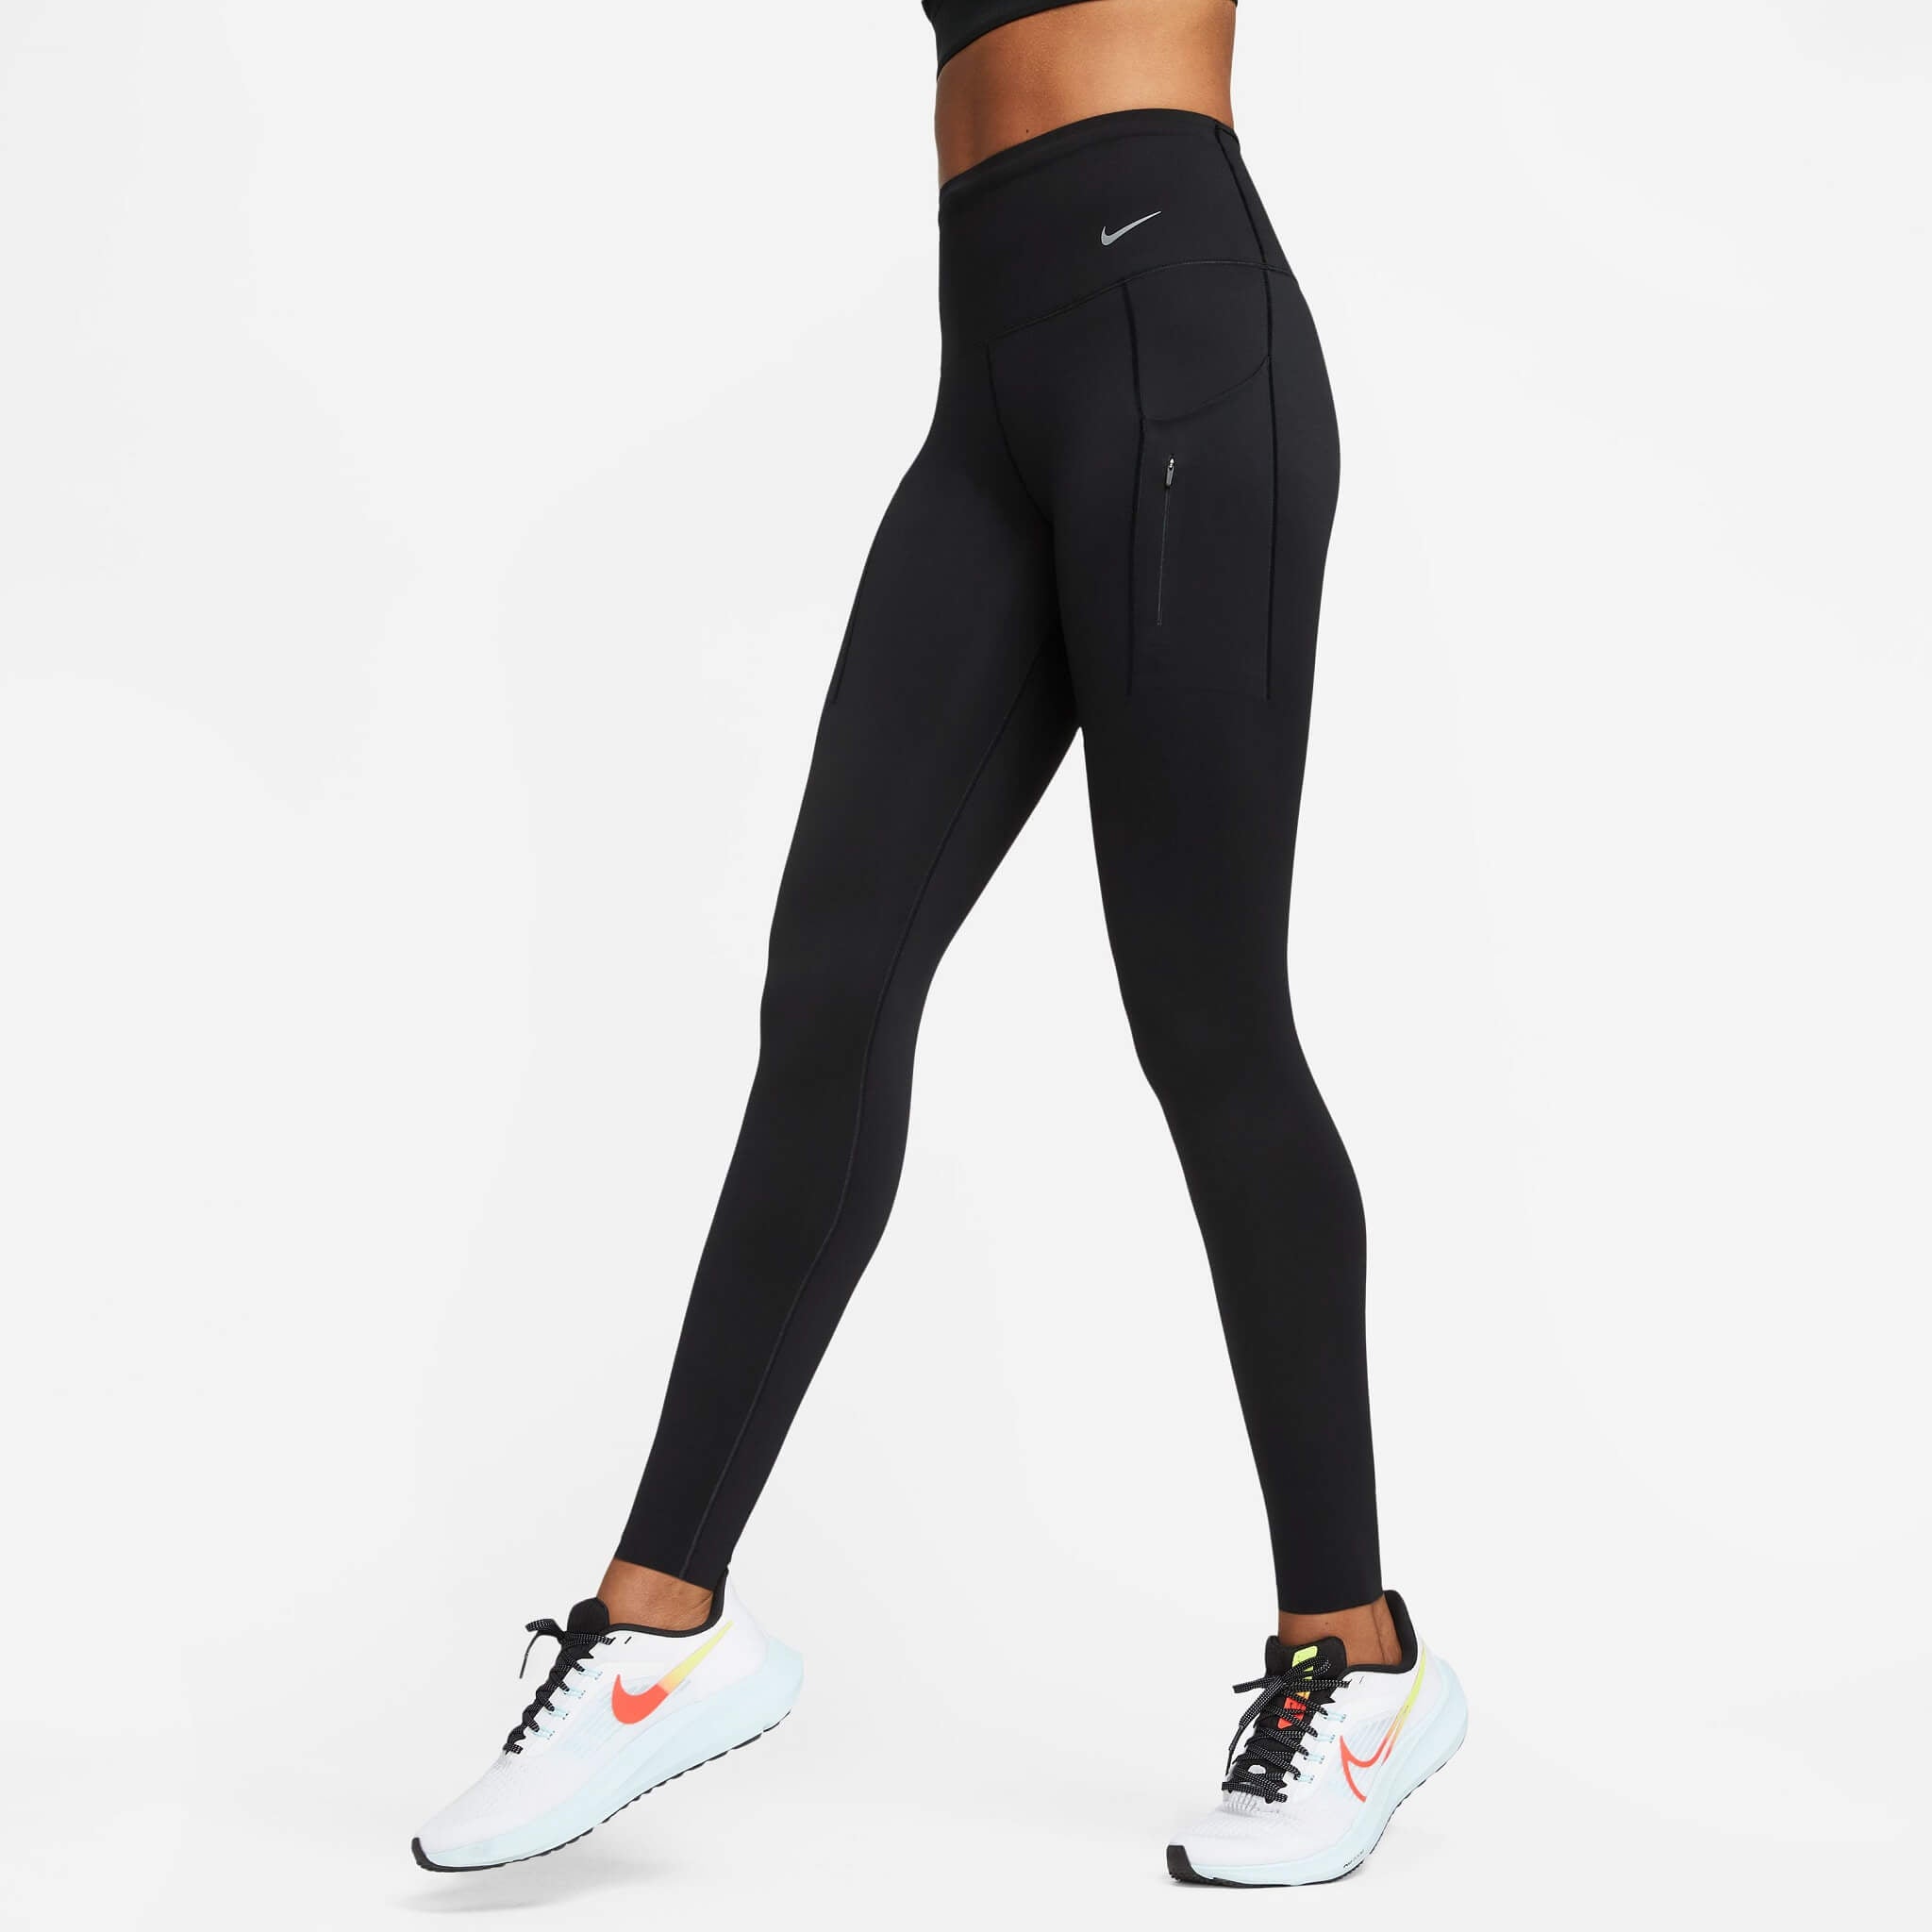 Legging high waist woman Nike One Dri-FIT - Baselayers - Women's